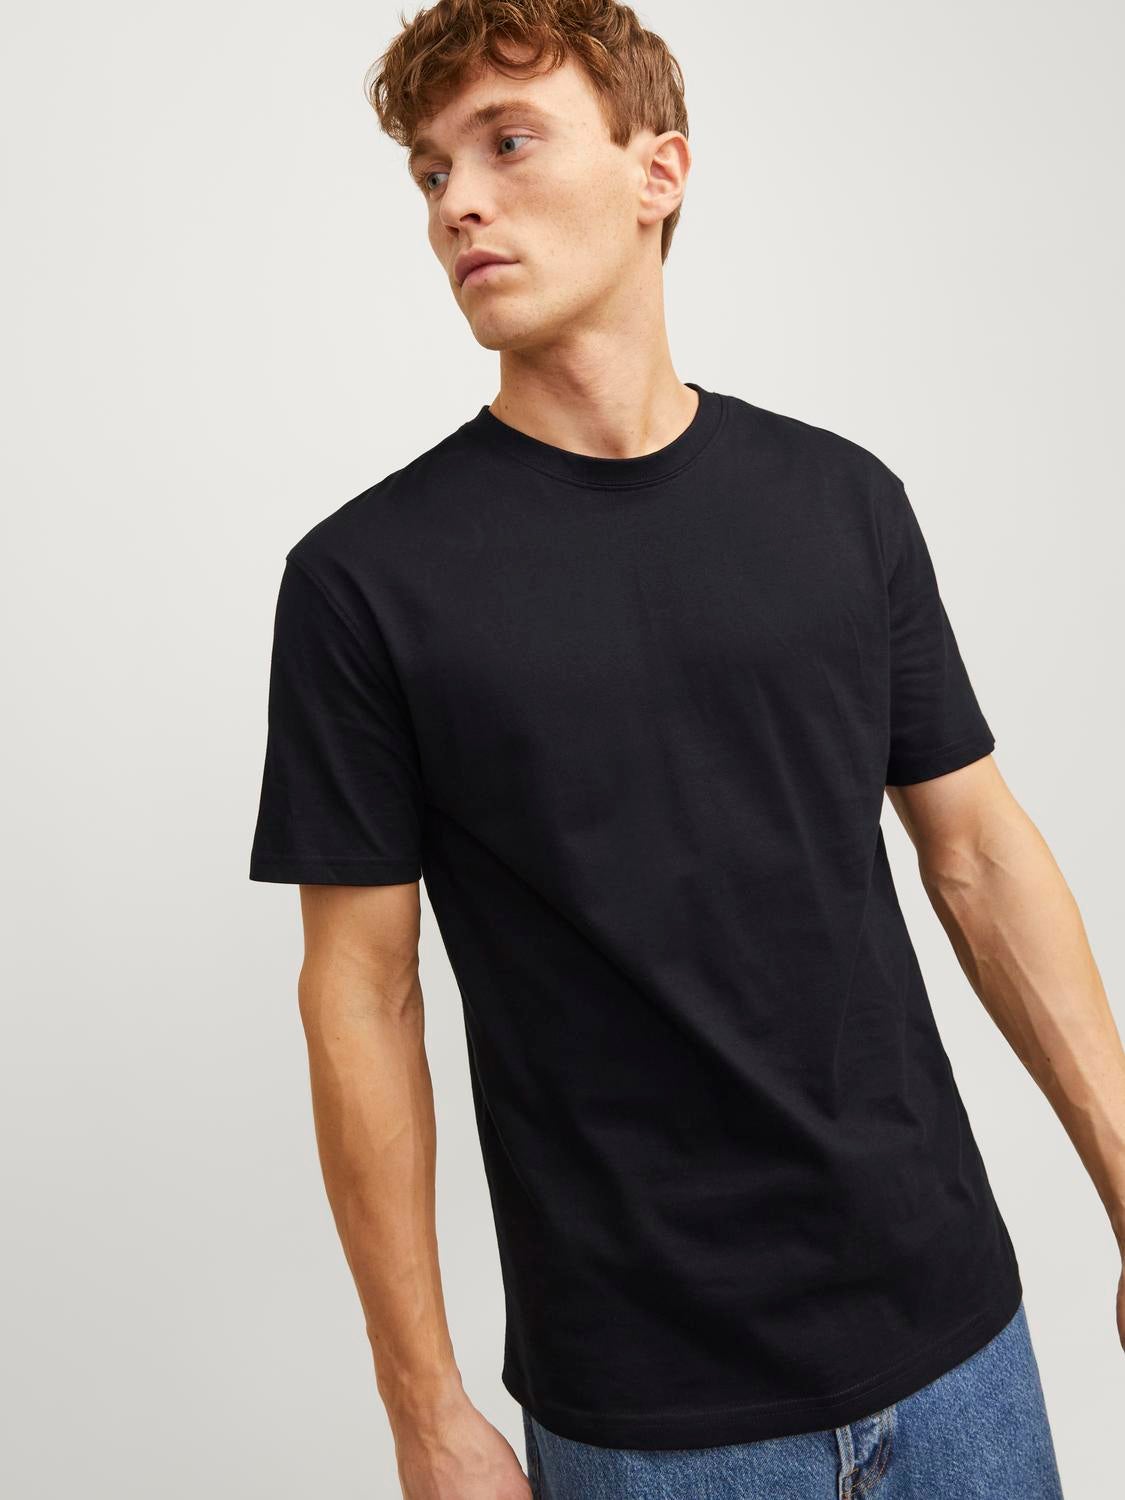 T-shirt Black | neck & Crew | Jones® Jack Plain